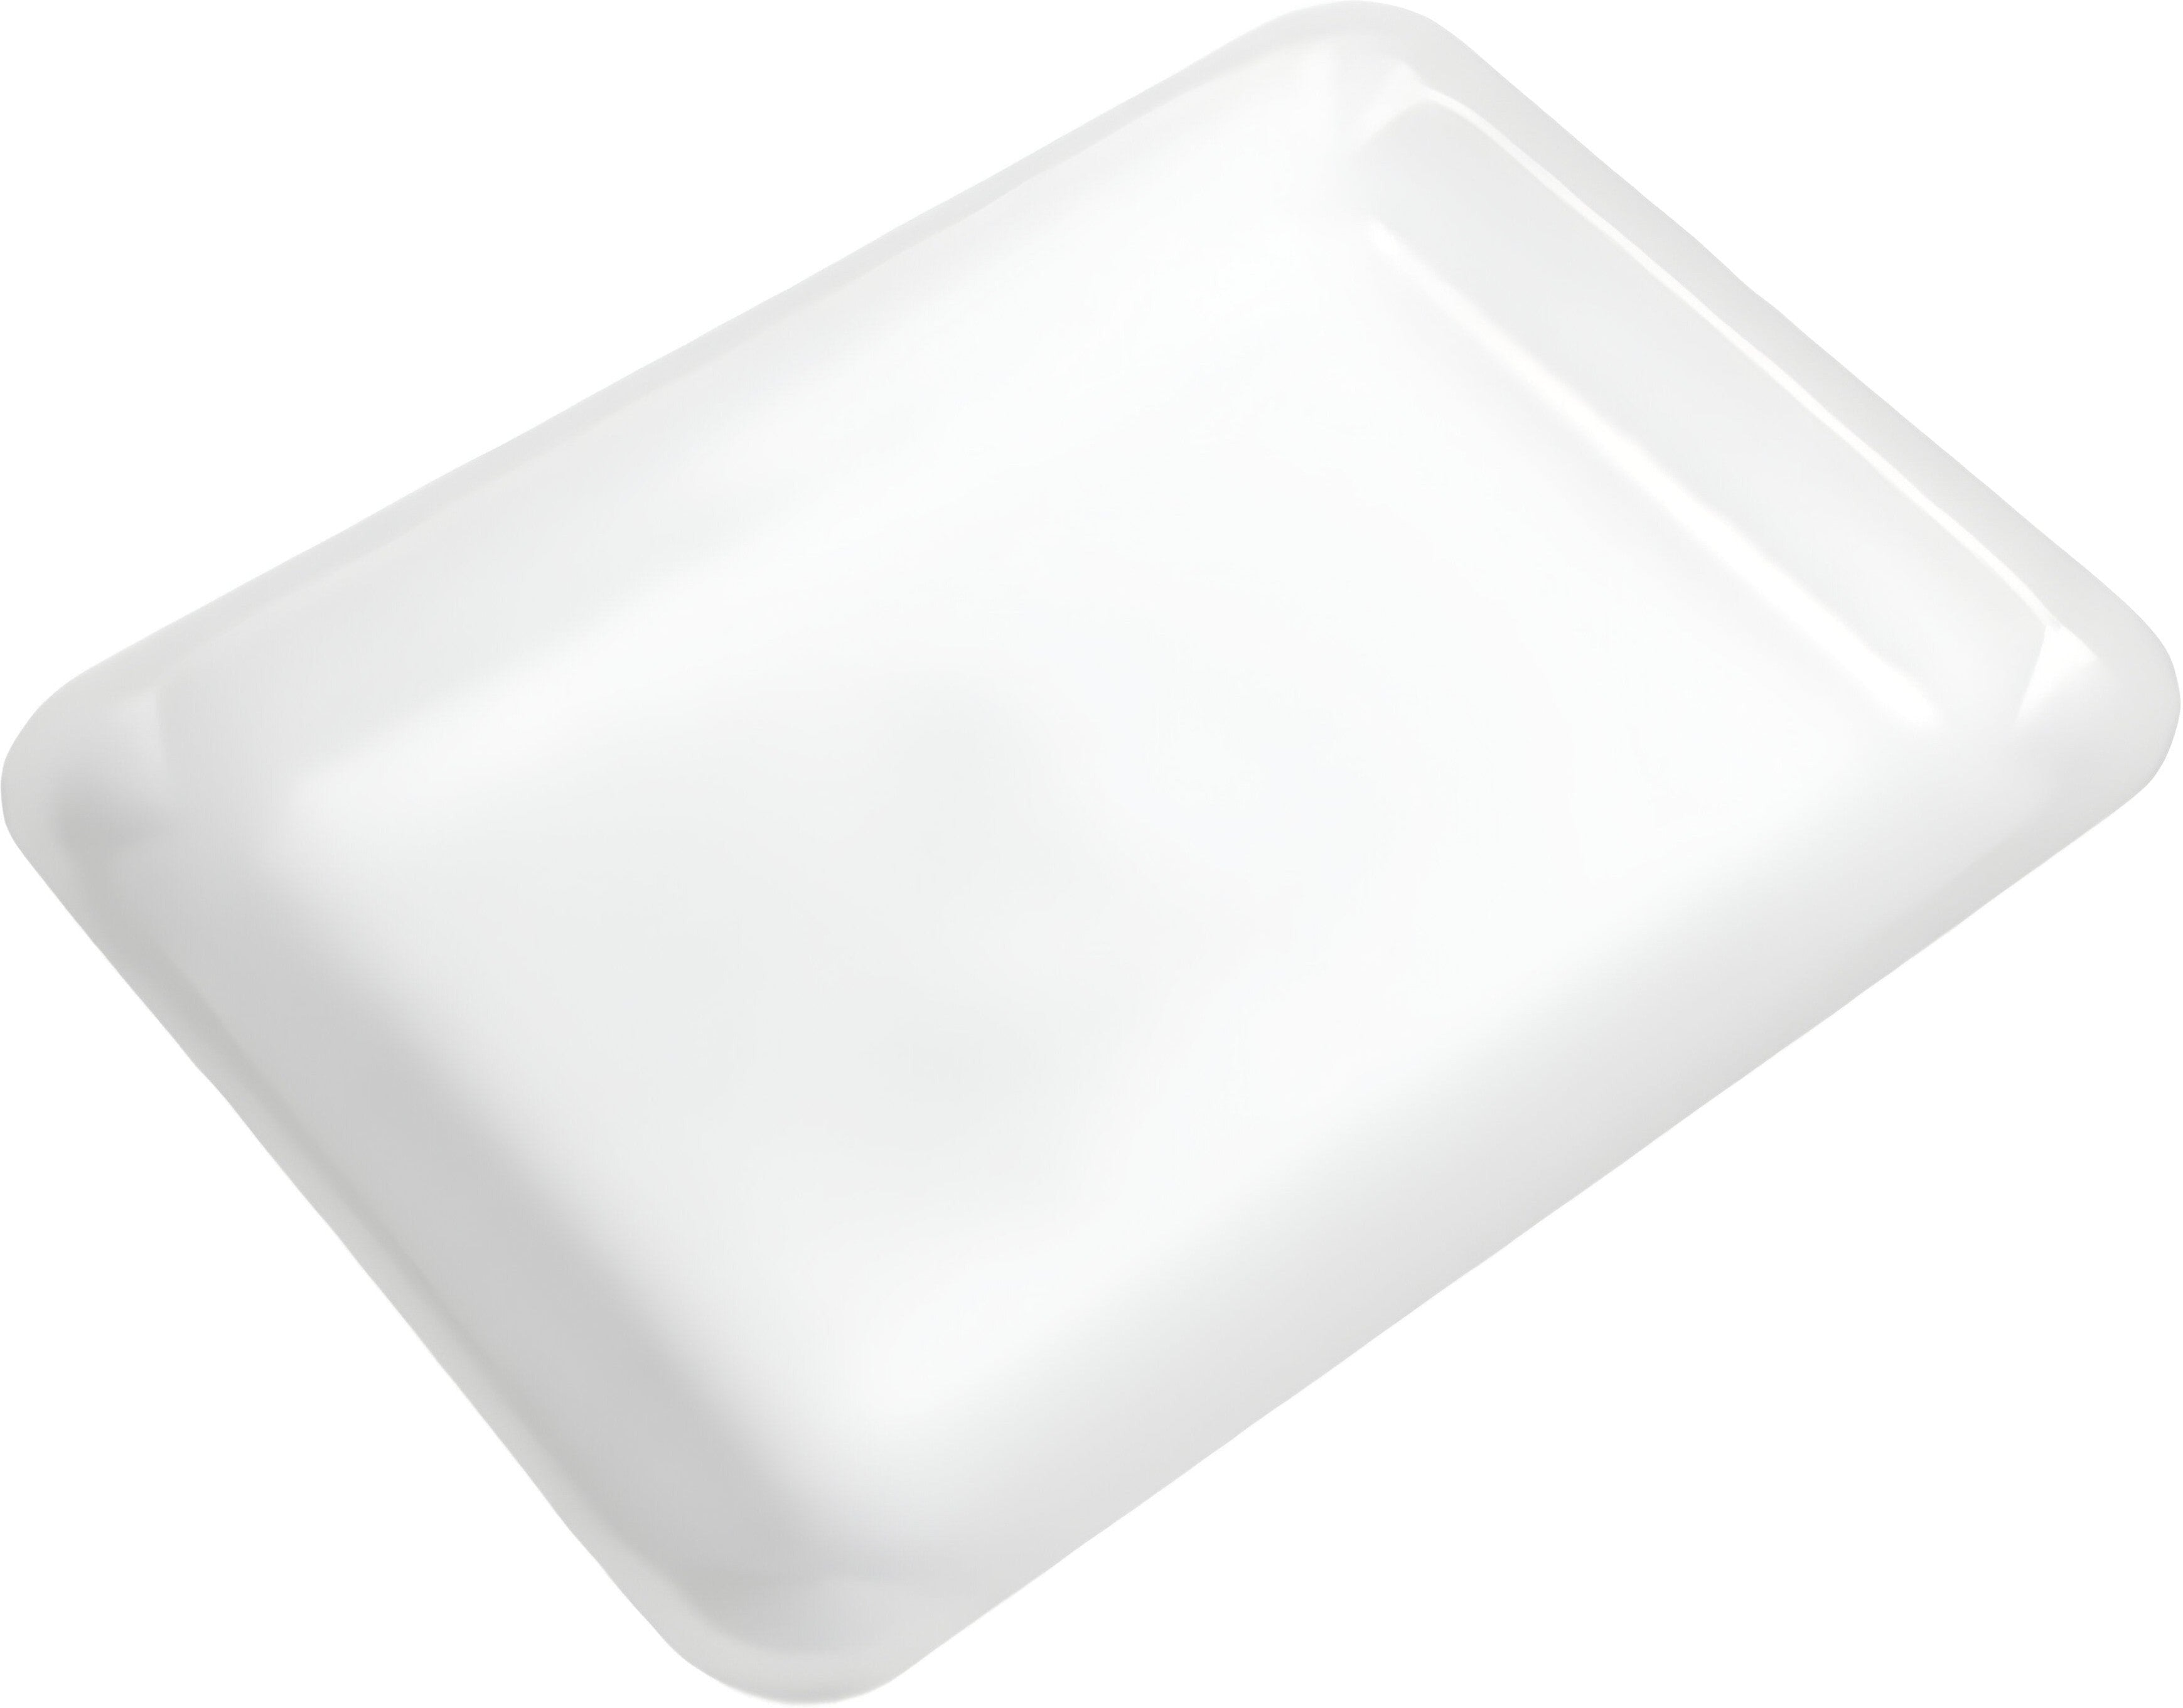 CKF Inc. - 7.2" x 9.2" x 1.3", 4P White Foam Trays, 400/Cs - 88150